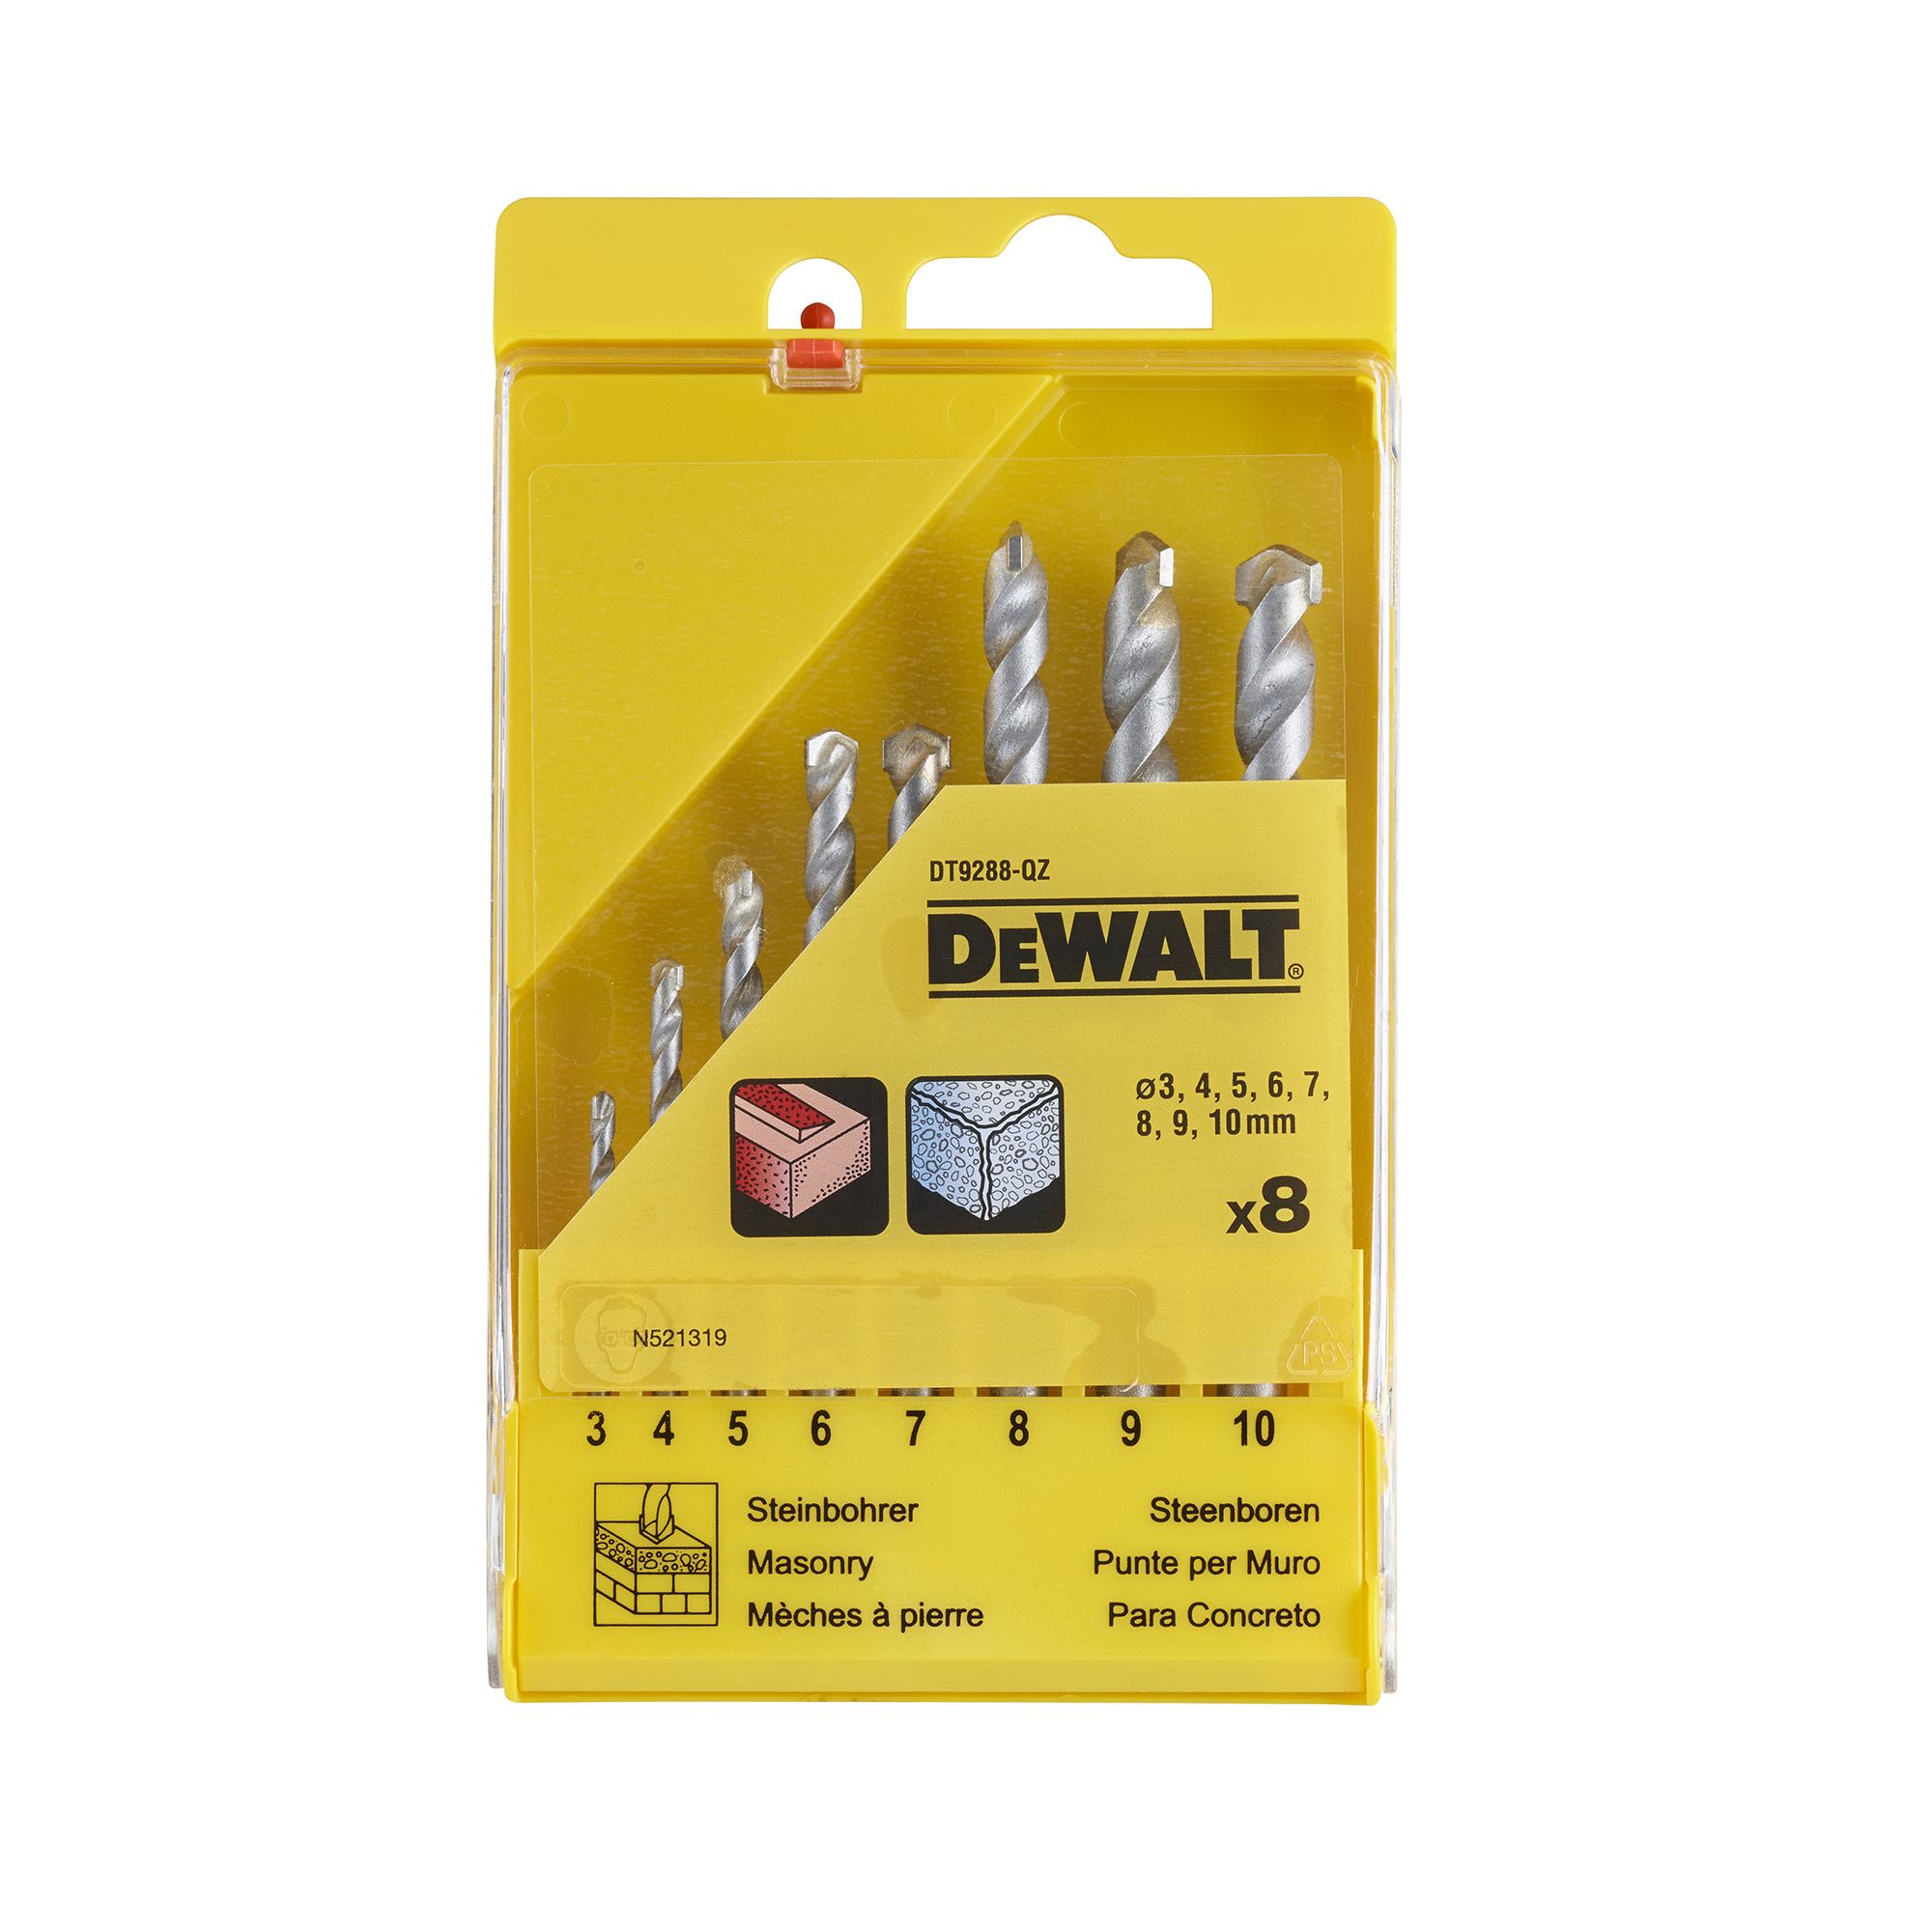 DeWalt 8 piece Masonry Drill bit set - DT9288-QZ